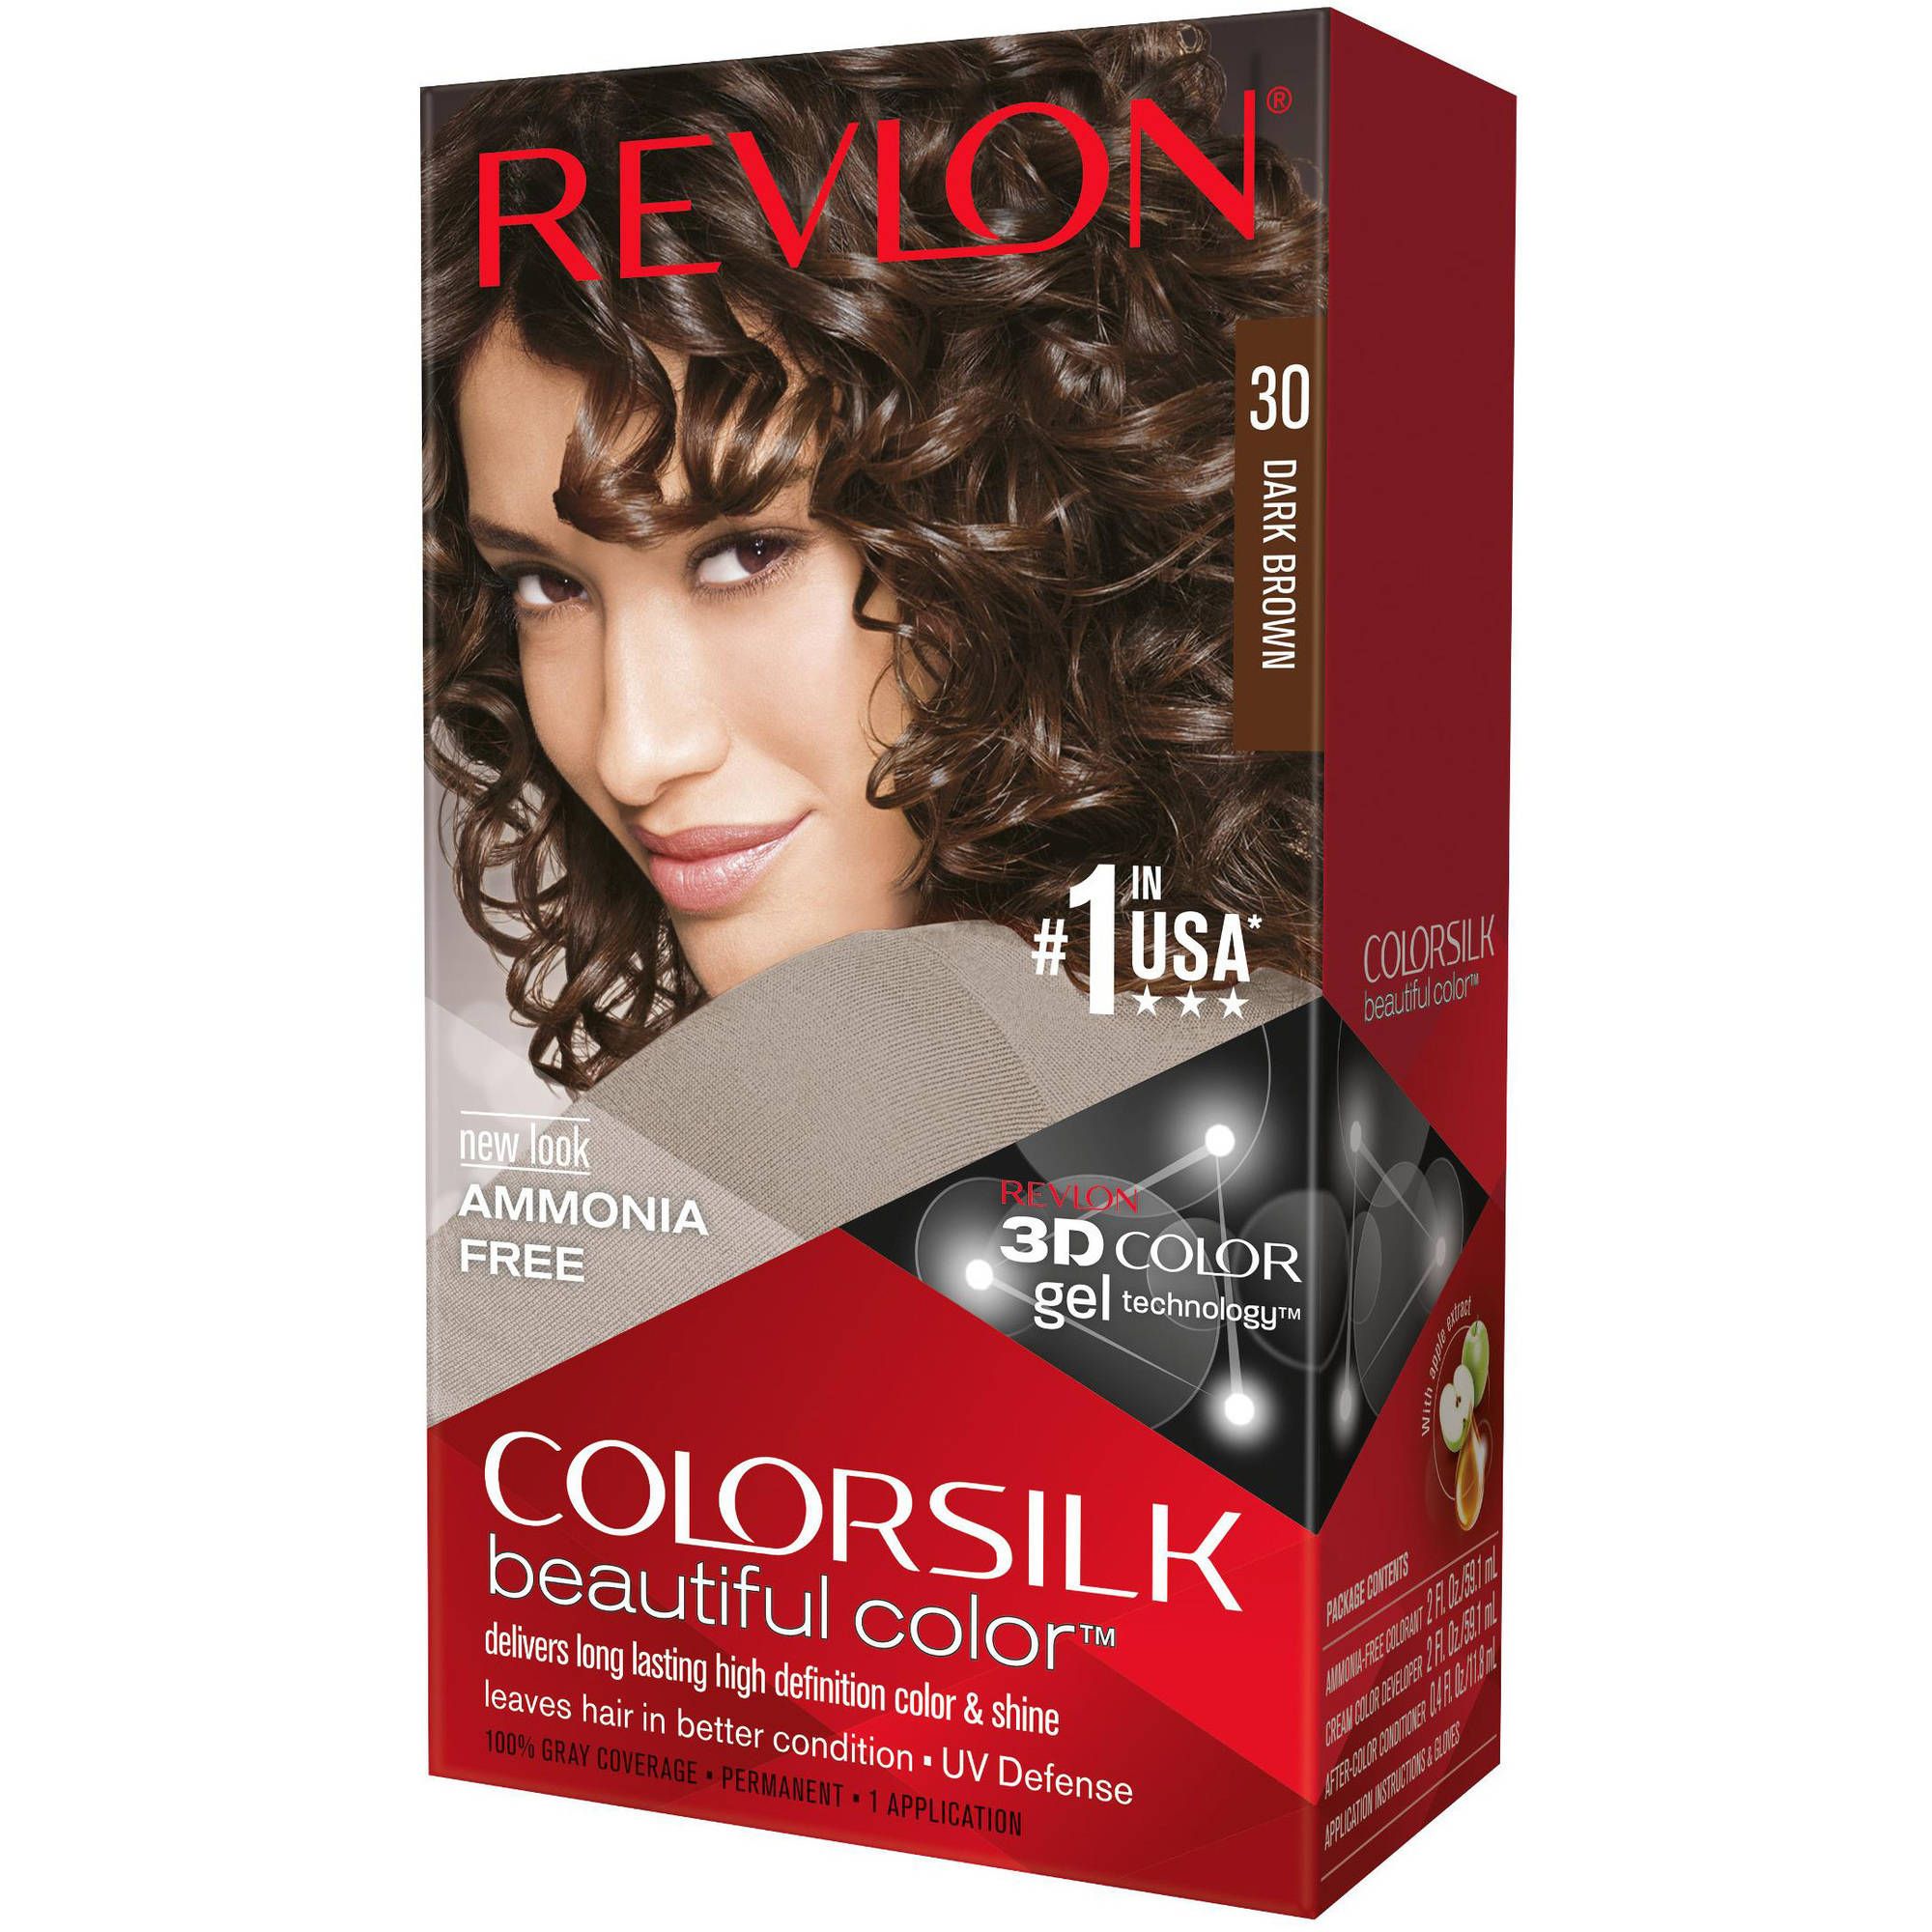 Revlon Colorsilk Shades Chart